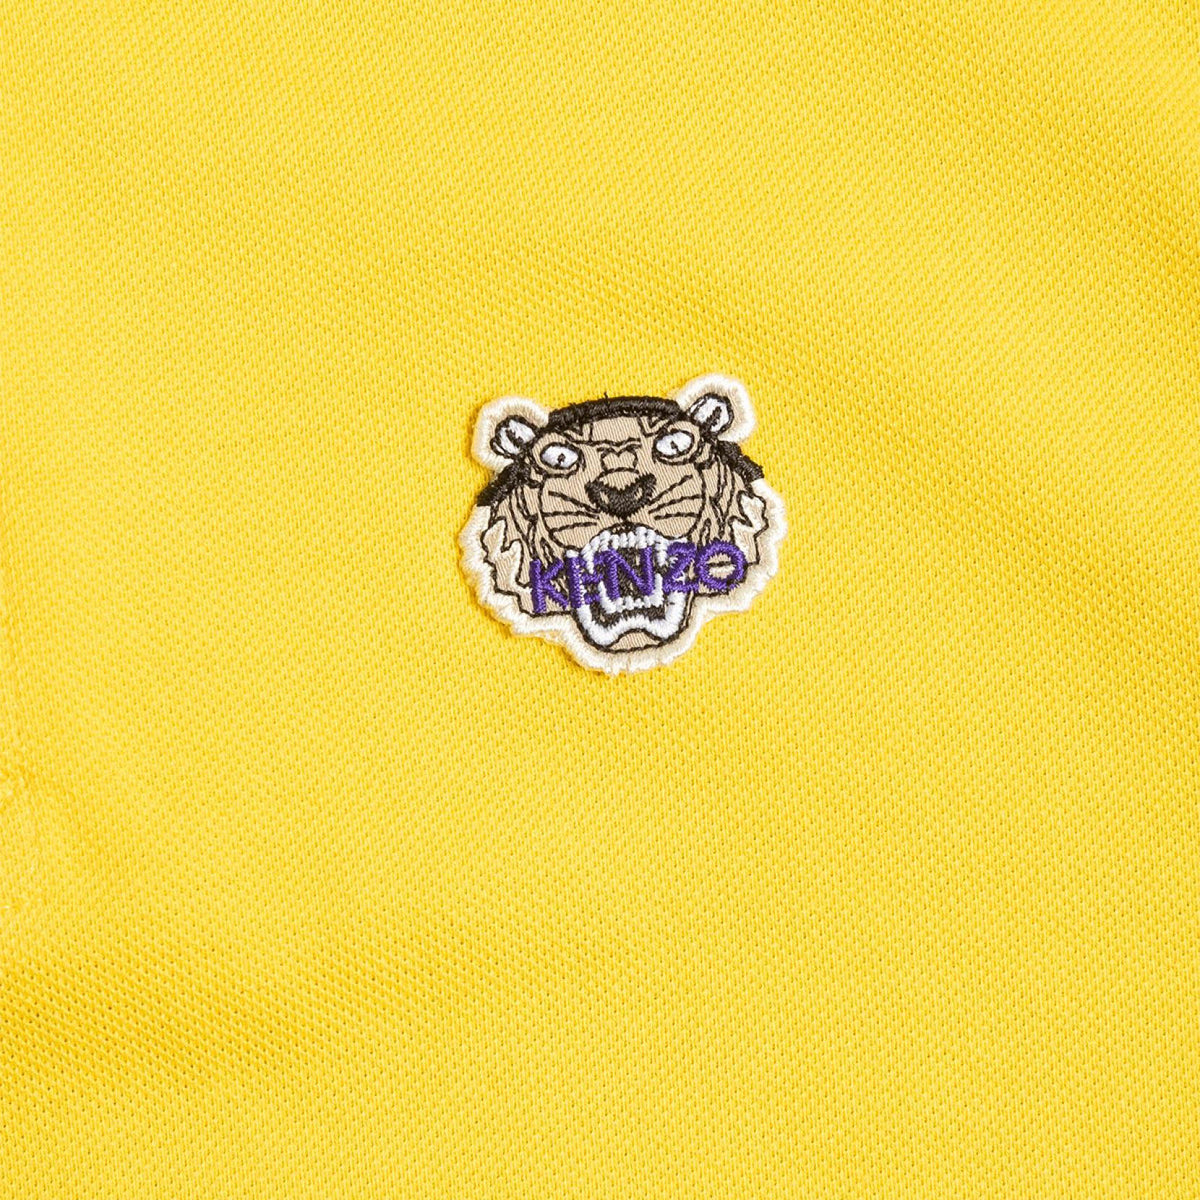 Kenzo Men's Tiger Crest Polo Shirt